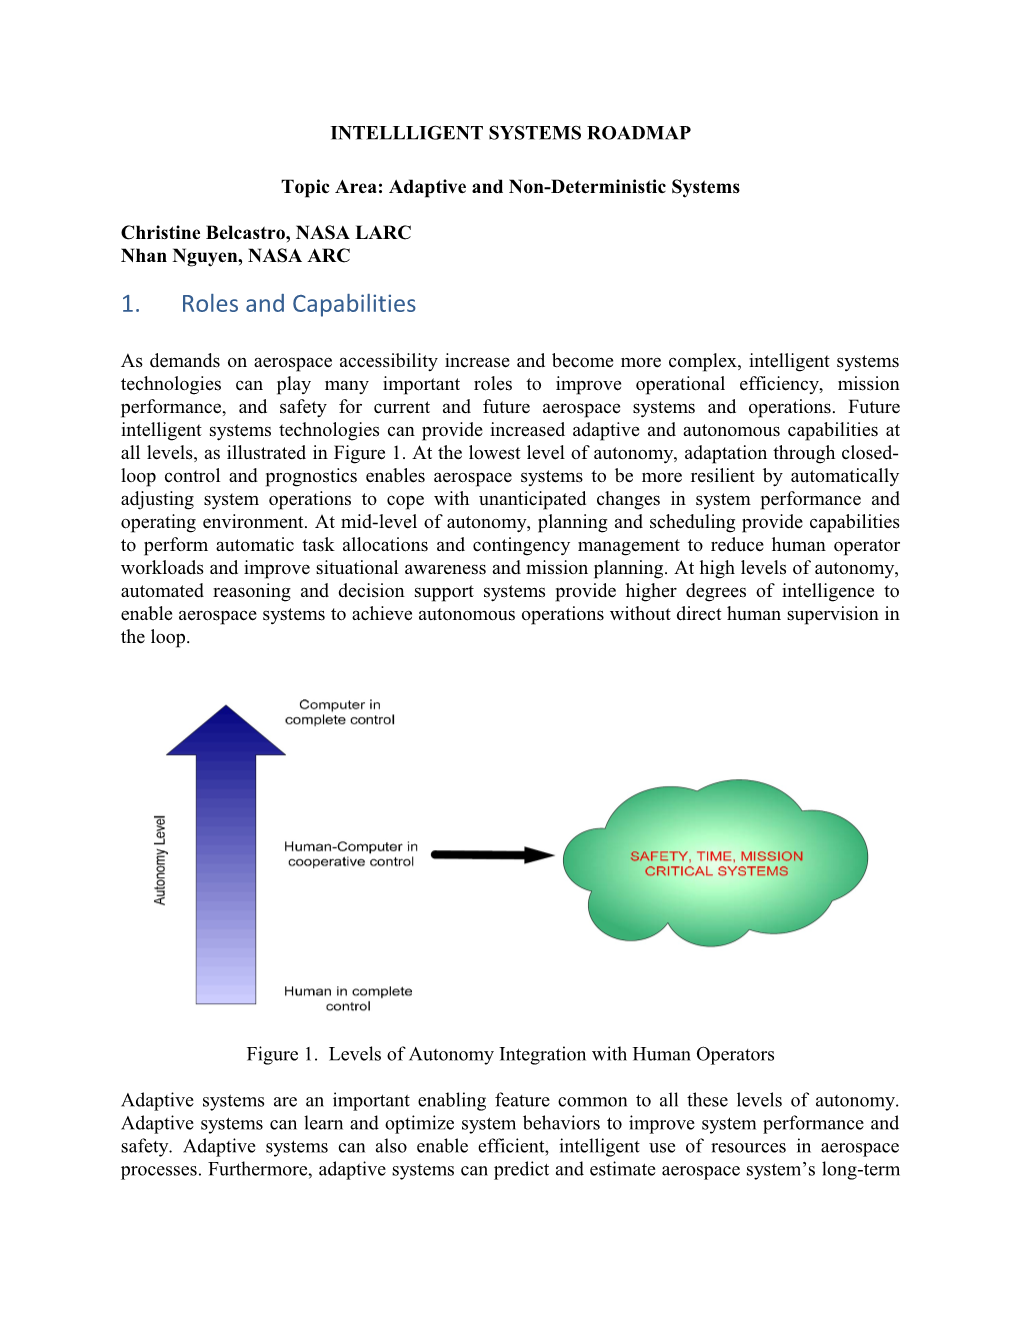 Topic Area: Adaptive and Non-Deterministic Systems